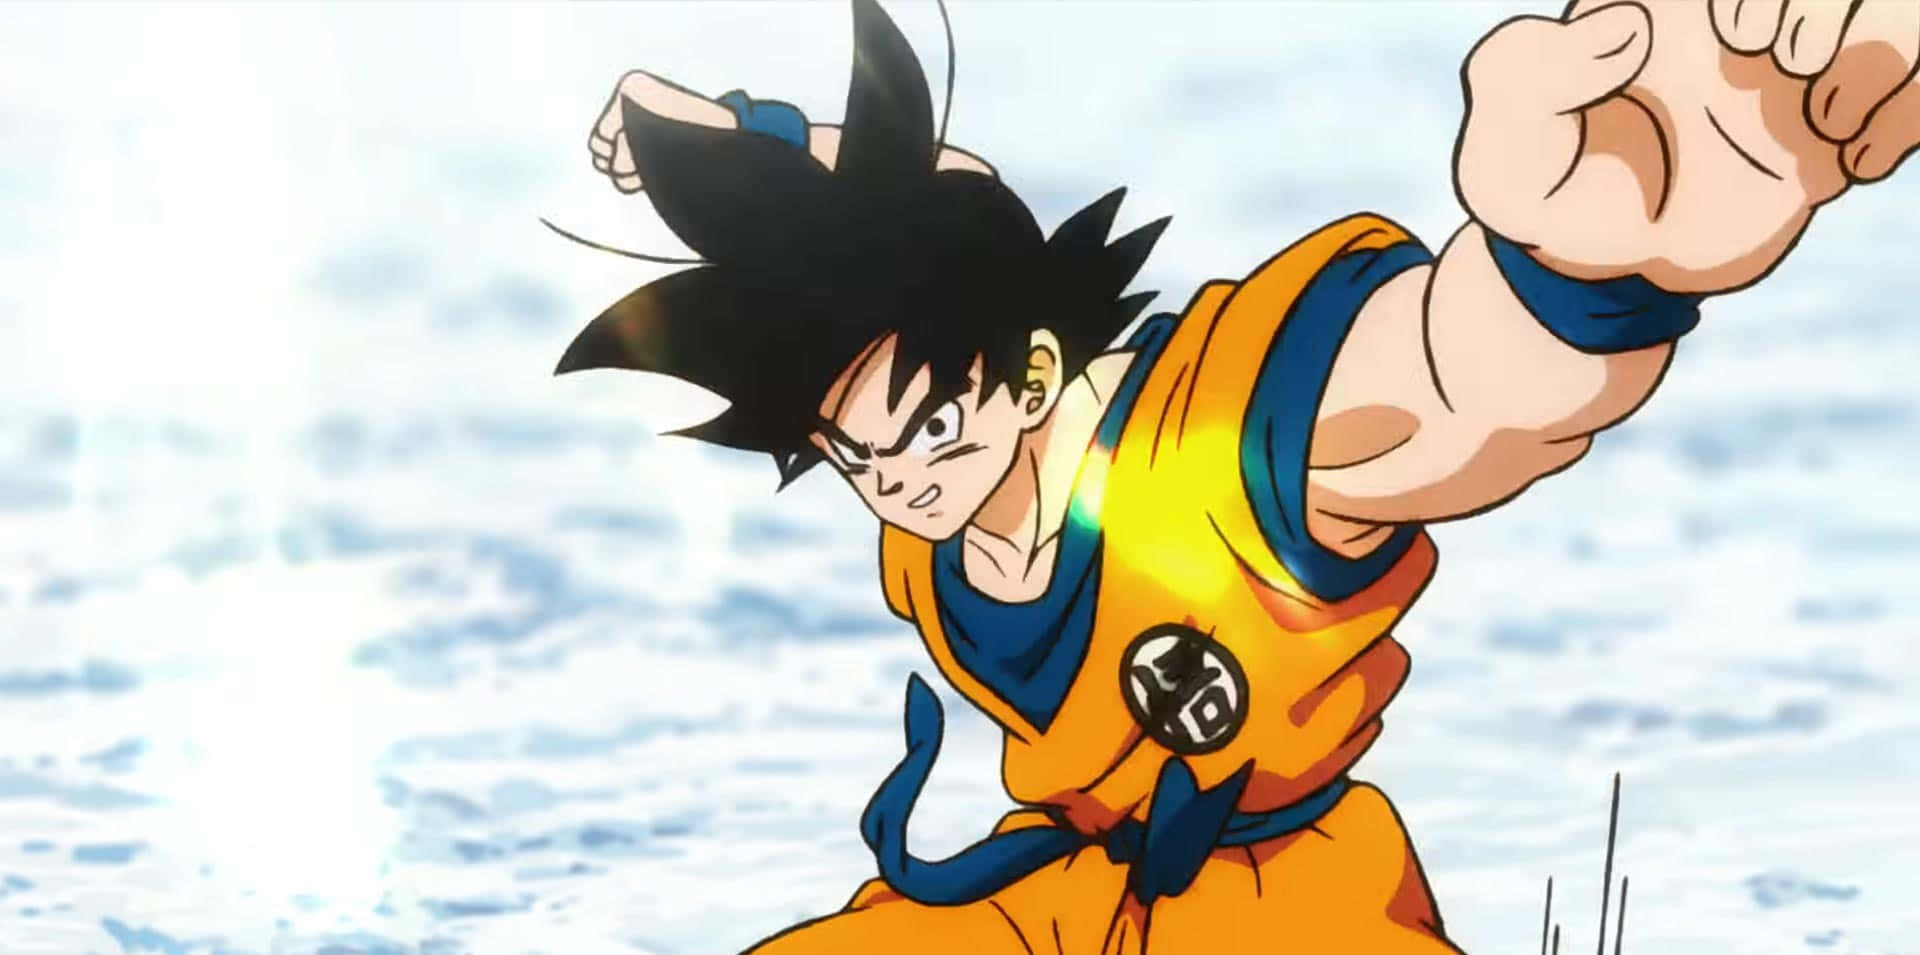 Laestrella De Las Películas De Dragon Ball, Goku, Está Listo Para La Aventura. Fondo de pantalla